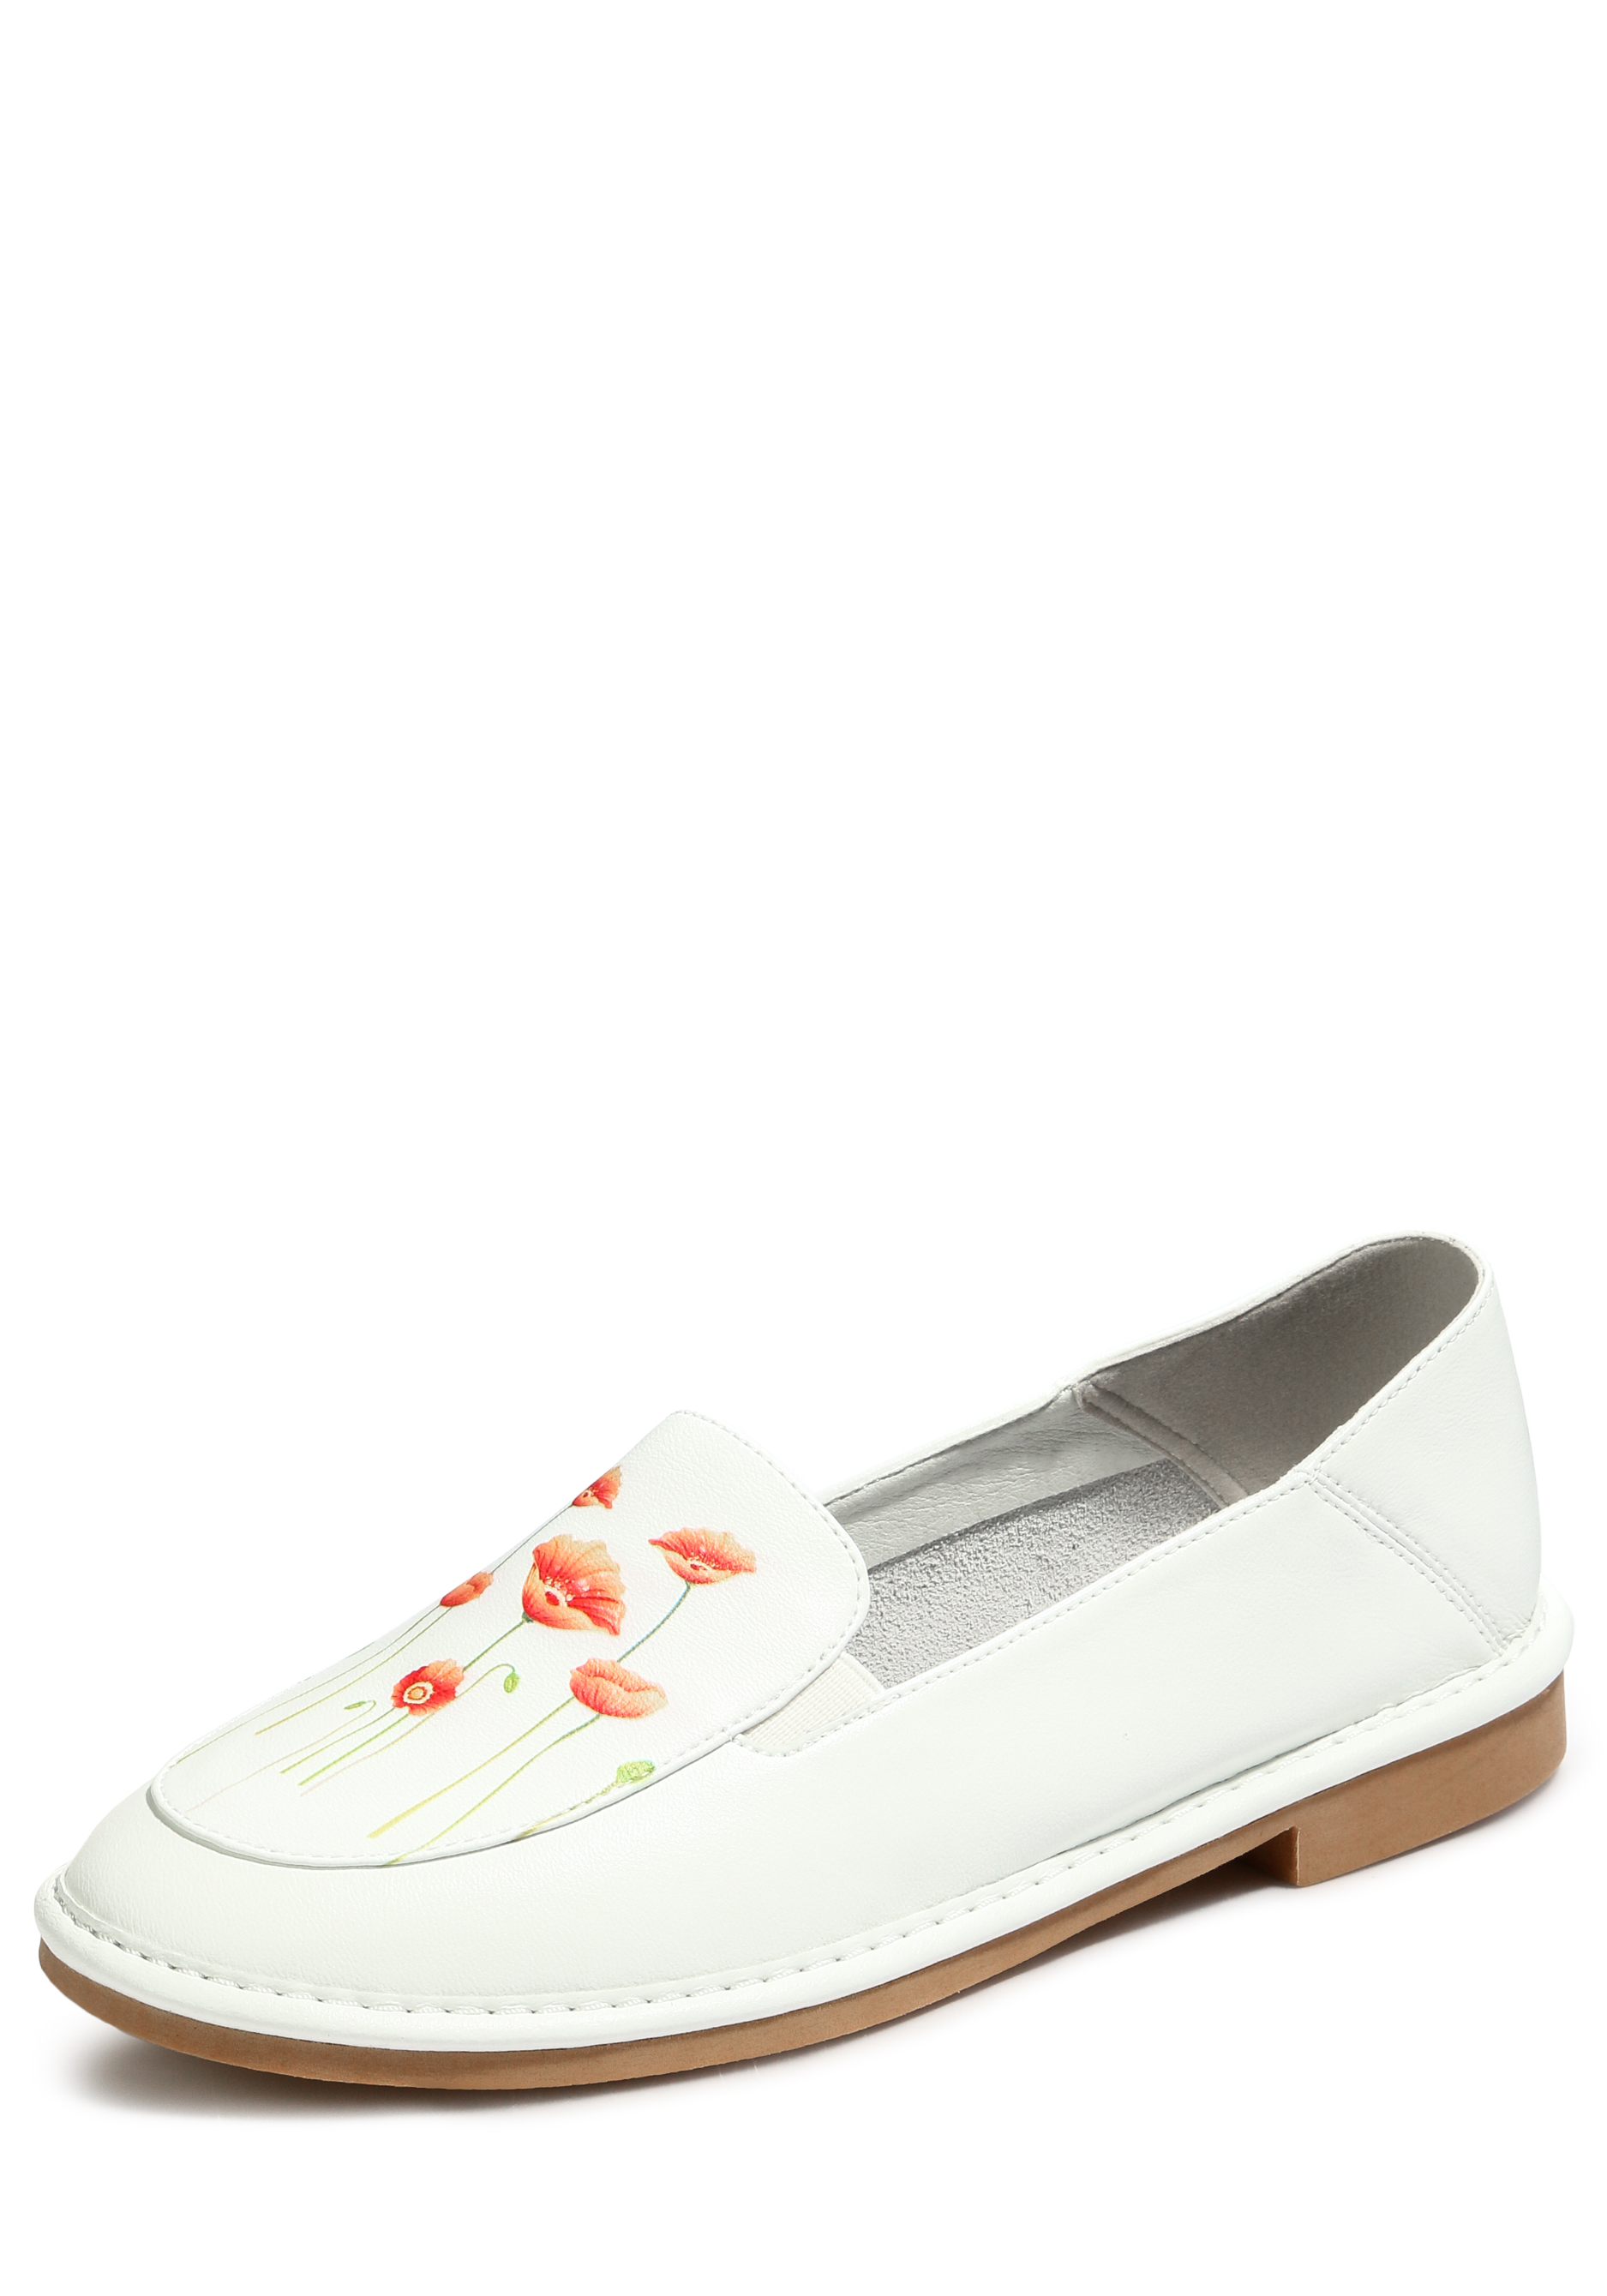 Туфли женские "Лили" KUMFO, цвет бежевый, размер 39